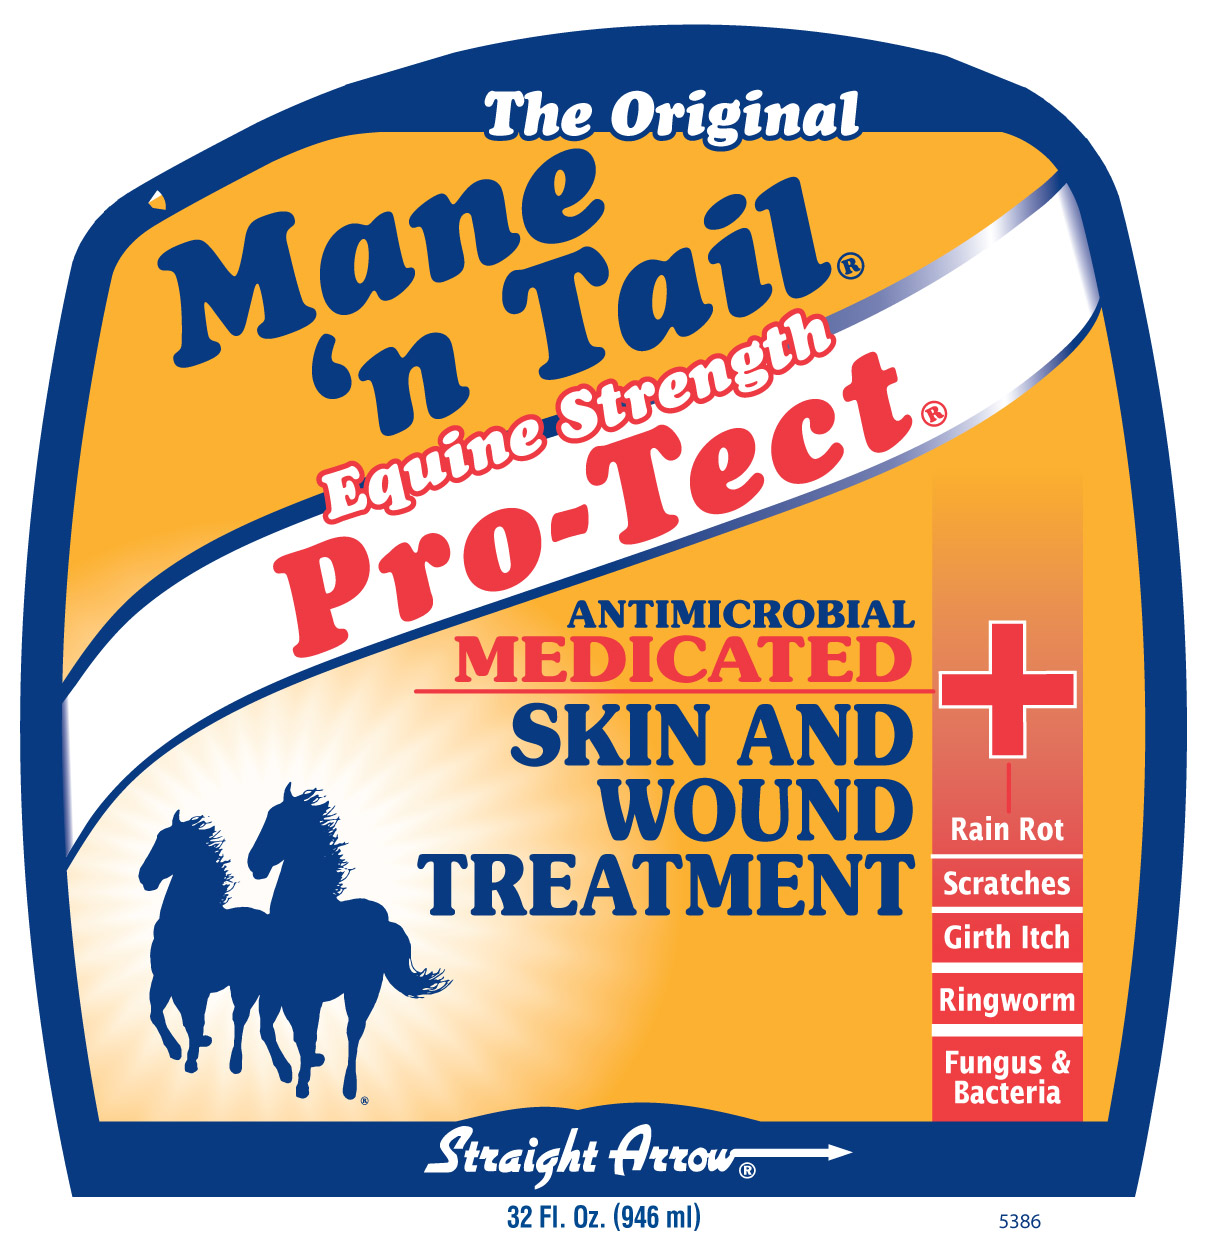 Pro-Tect AM Wound Treatment Front Label